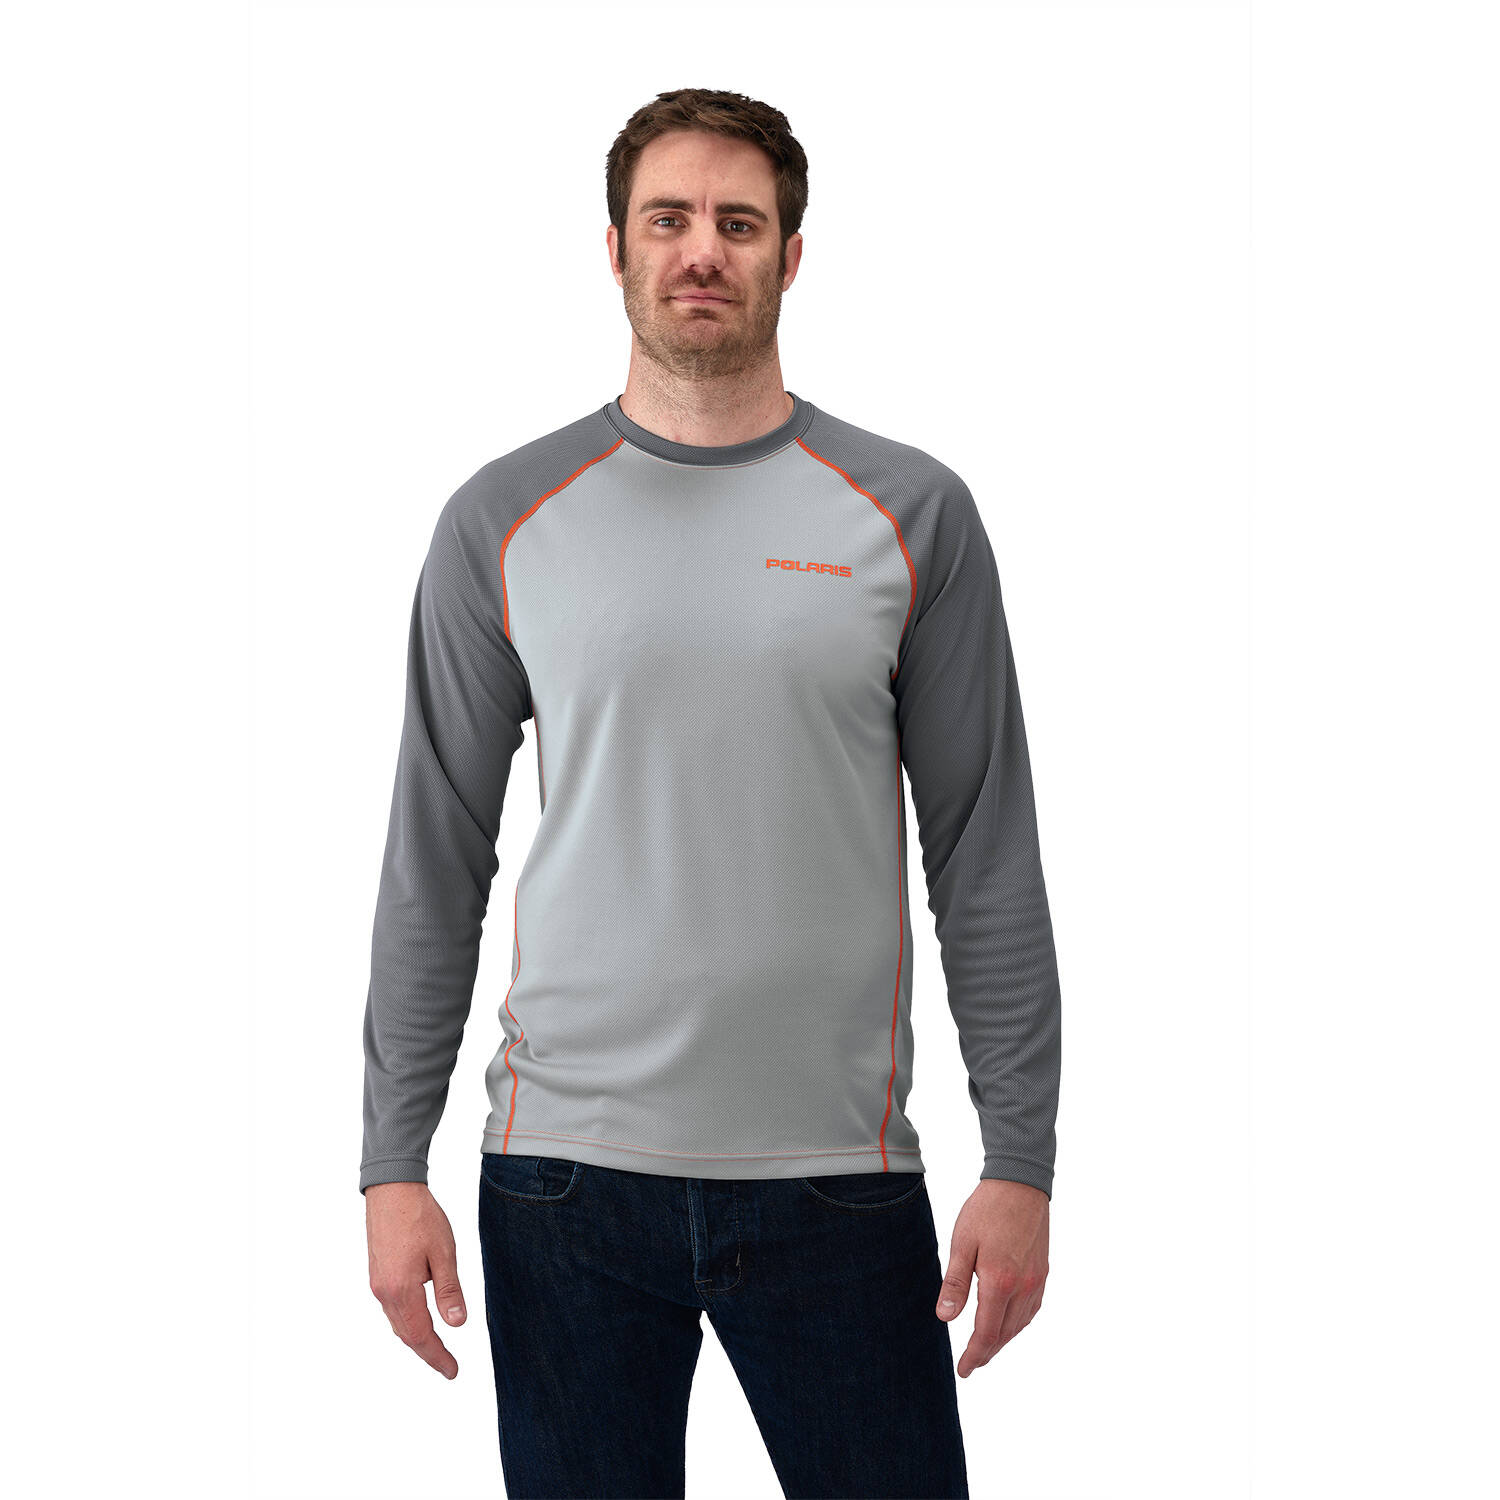 Men's Long-Sleeve Cooling Performance Shirt with Polaris® Logo, Gray ...